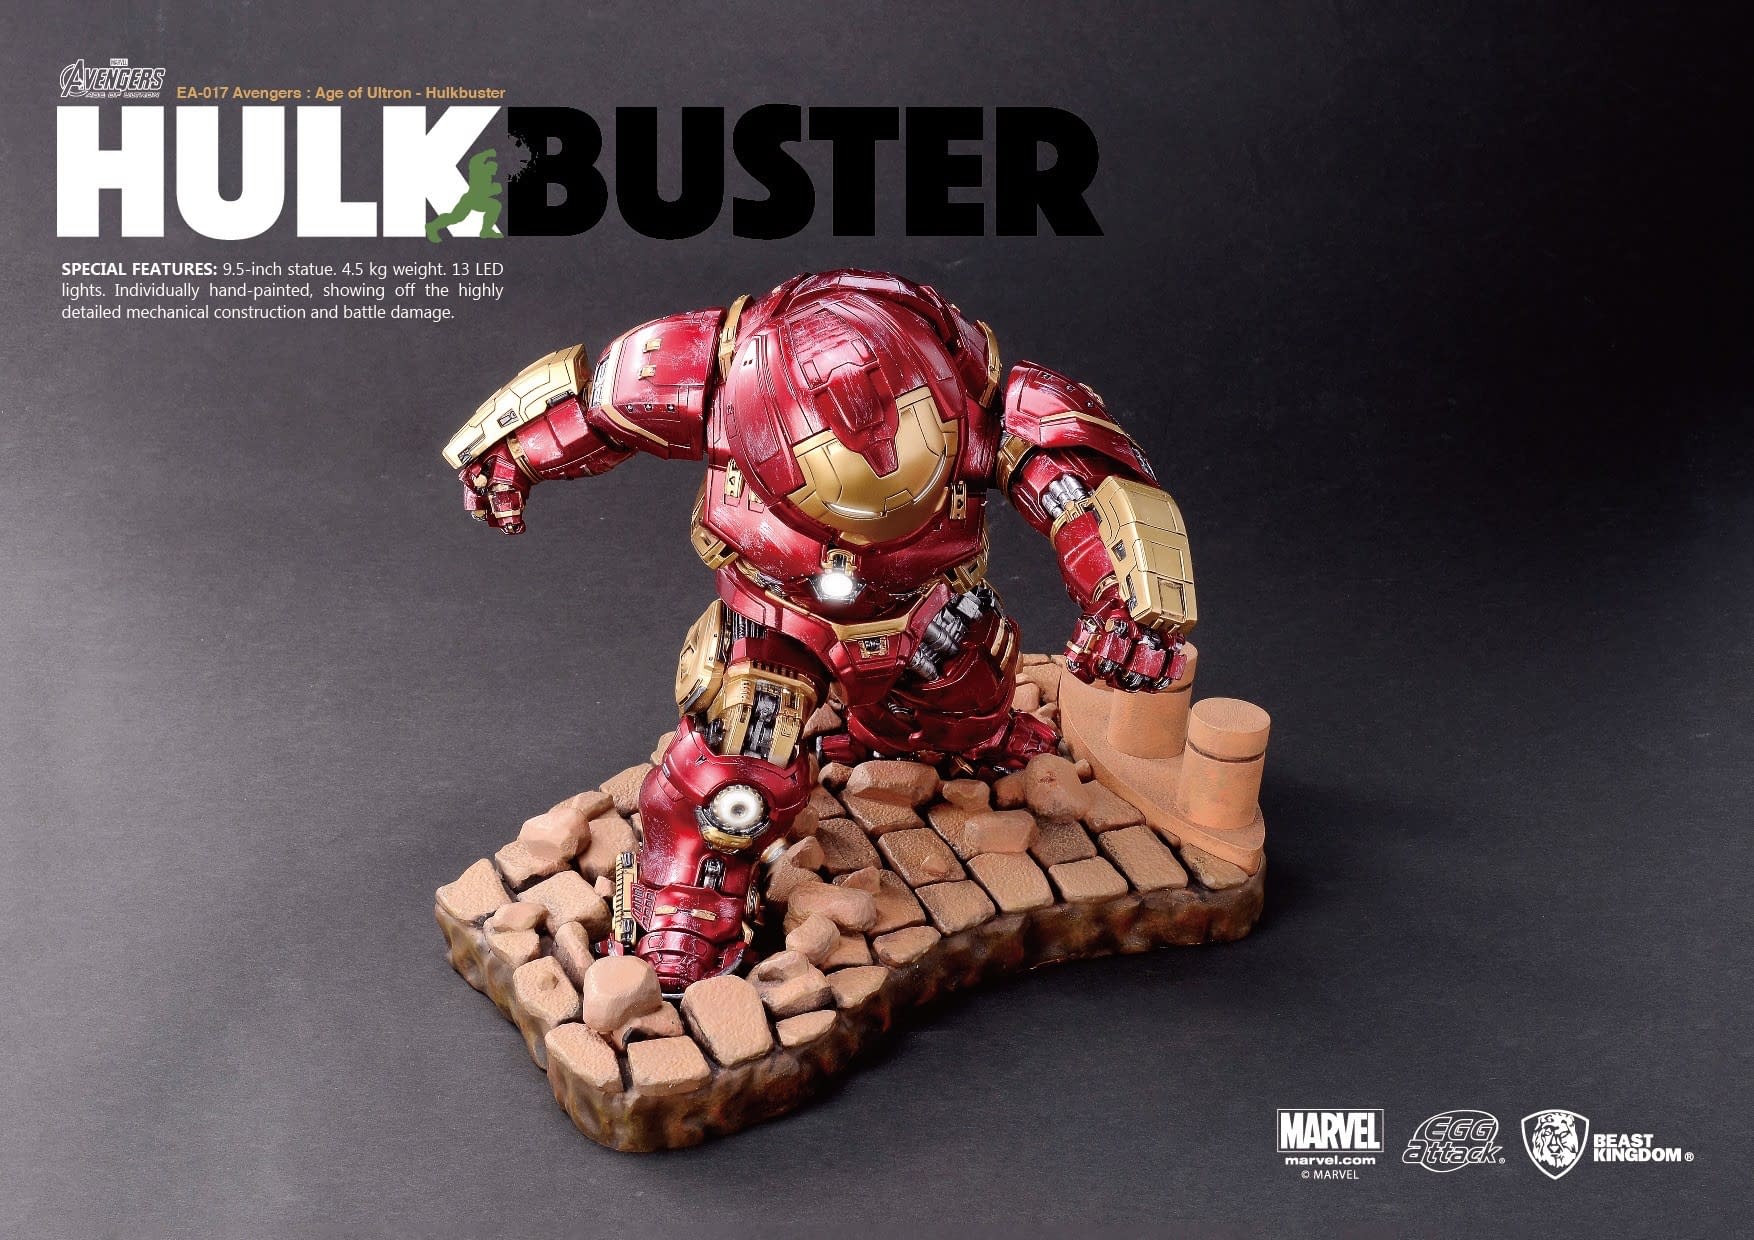 Hulkbuster Takes on the Hulk in the New Beast Kingdom Statue Set